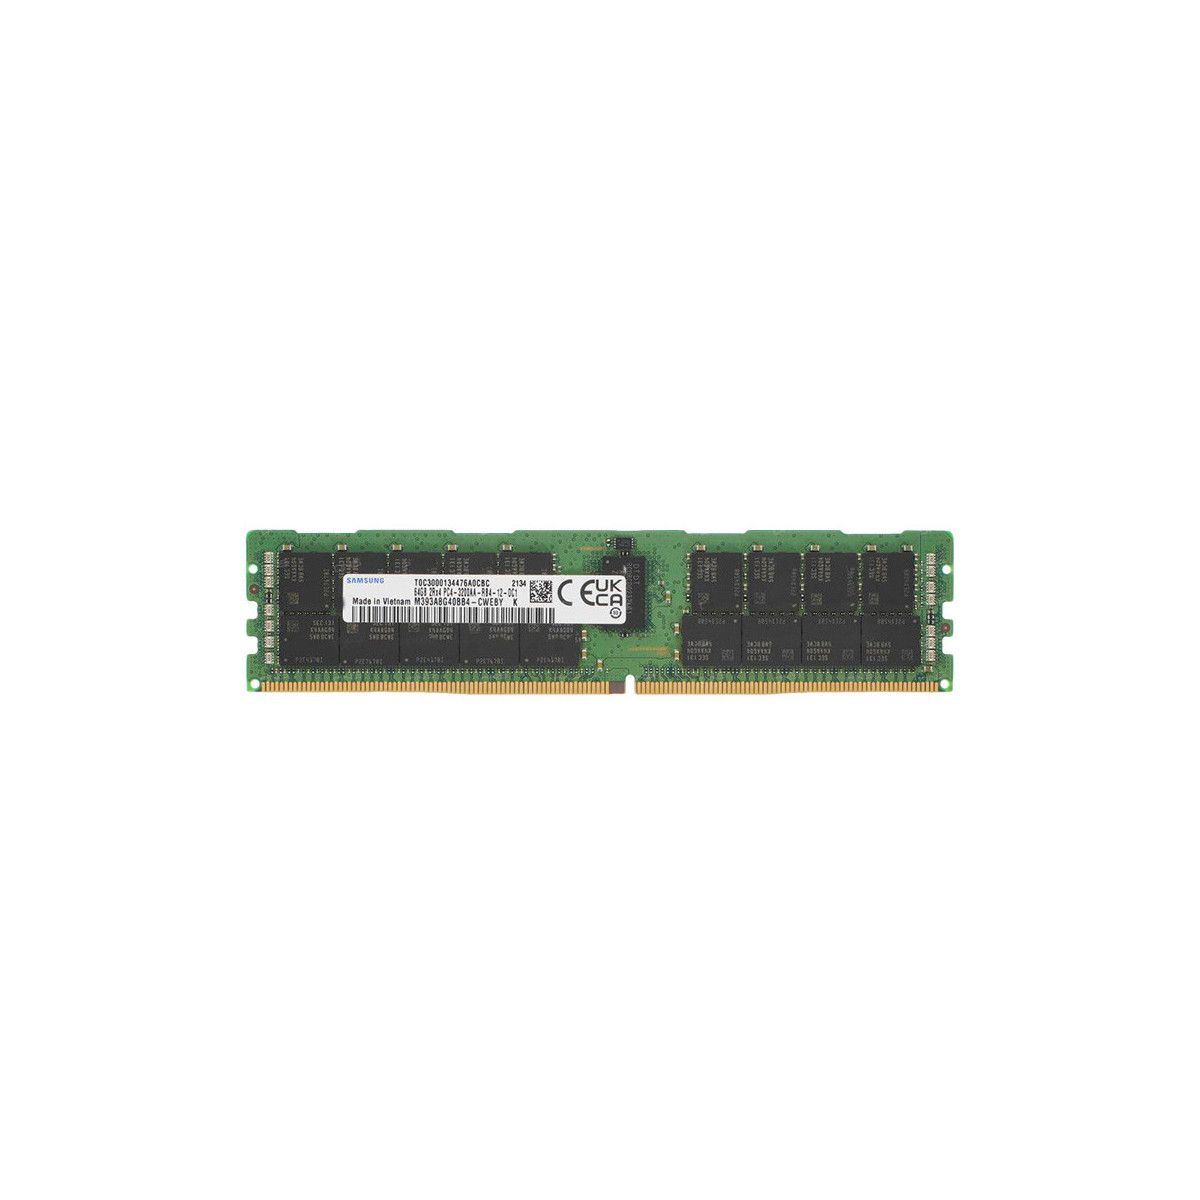 P25205-B21-MS - Memstar 1x 64GB DDR4-3200 RDIMM PC4-25600R - Mem-star Kompatybilna pamięć OEM 1 - Memstar 